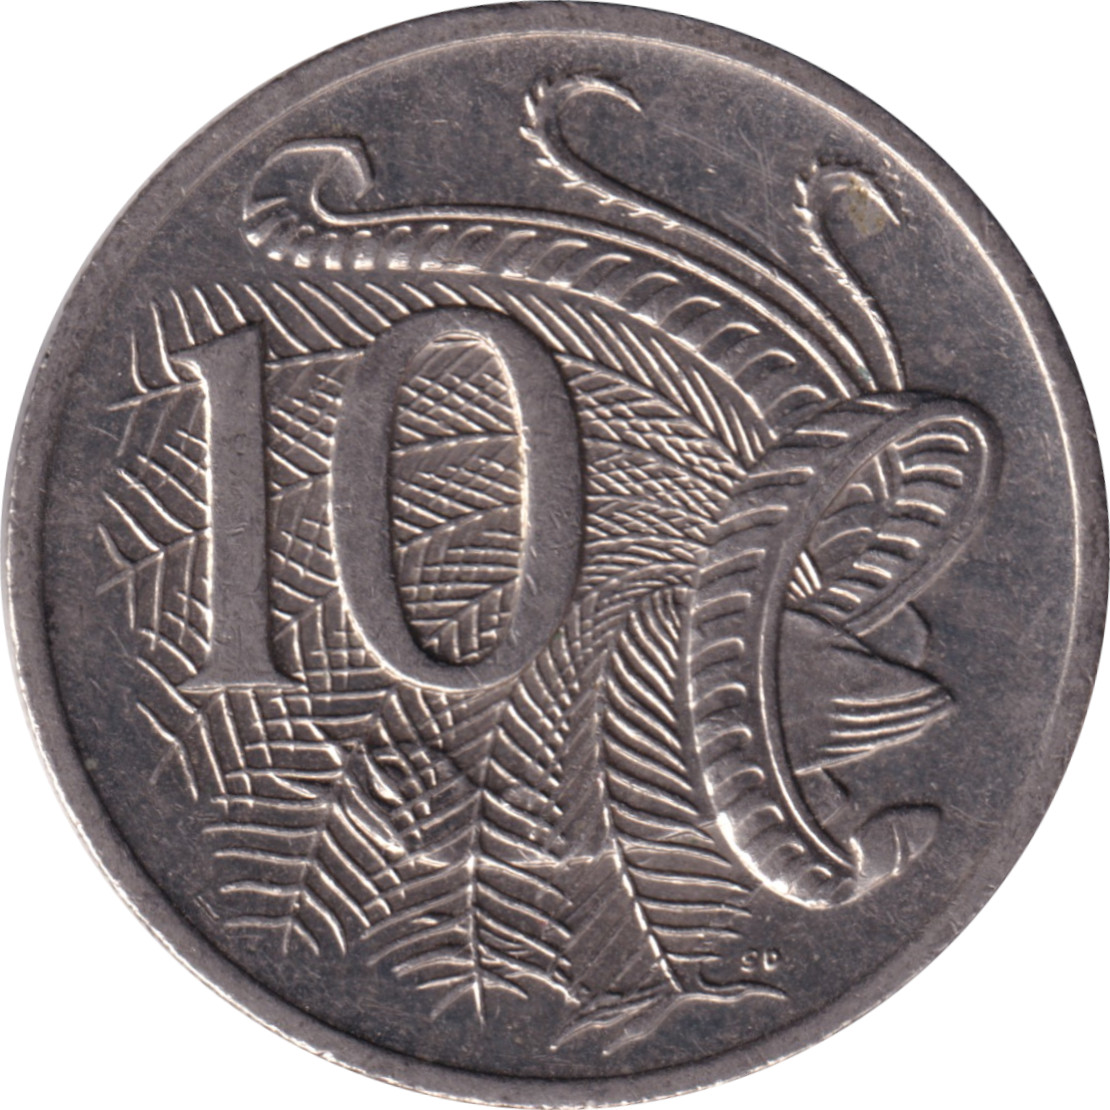 10 cents - Elizabeth II - Mature head